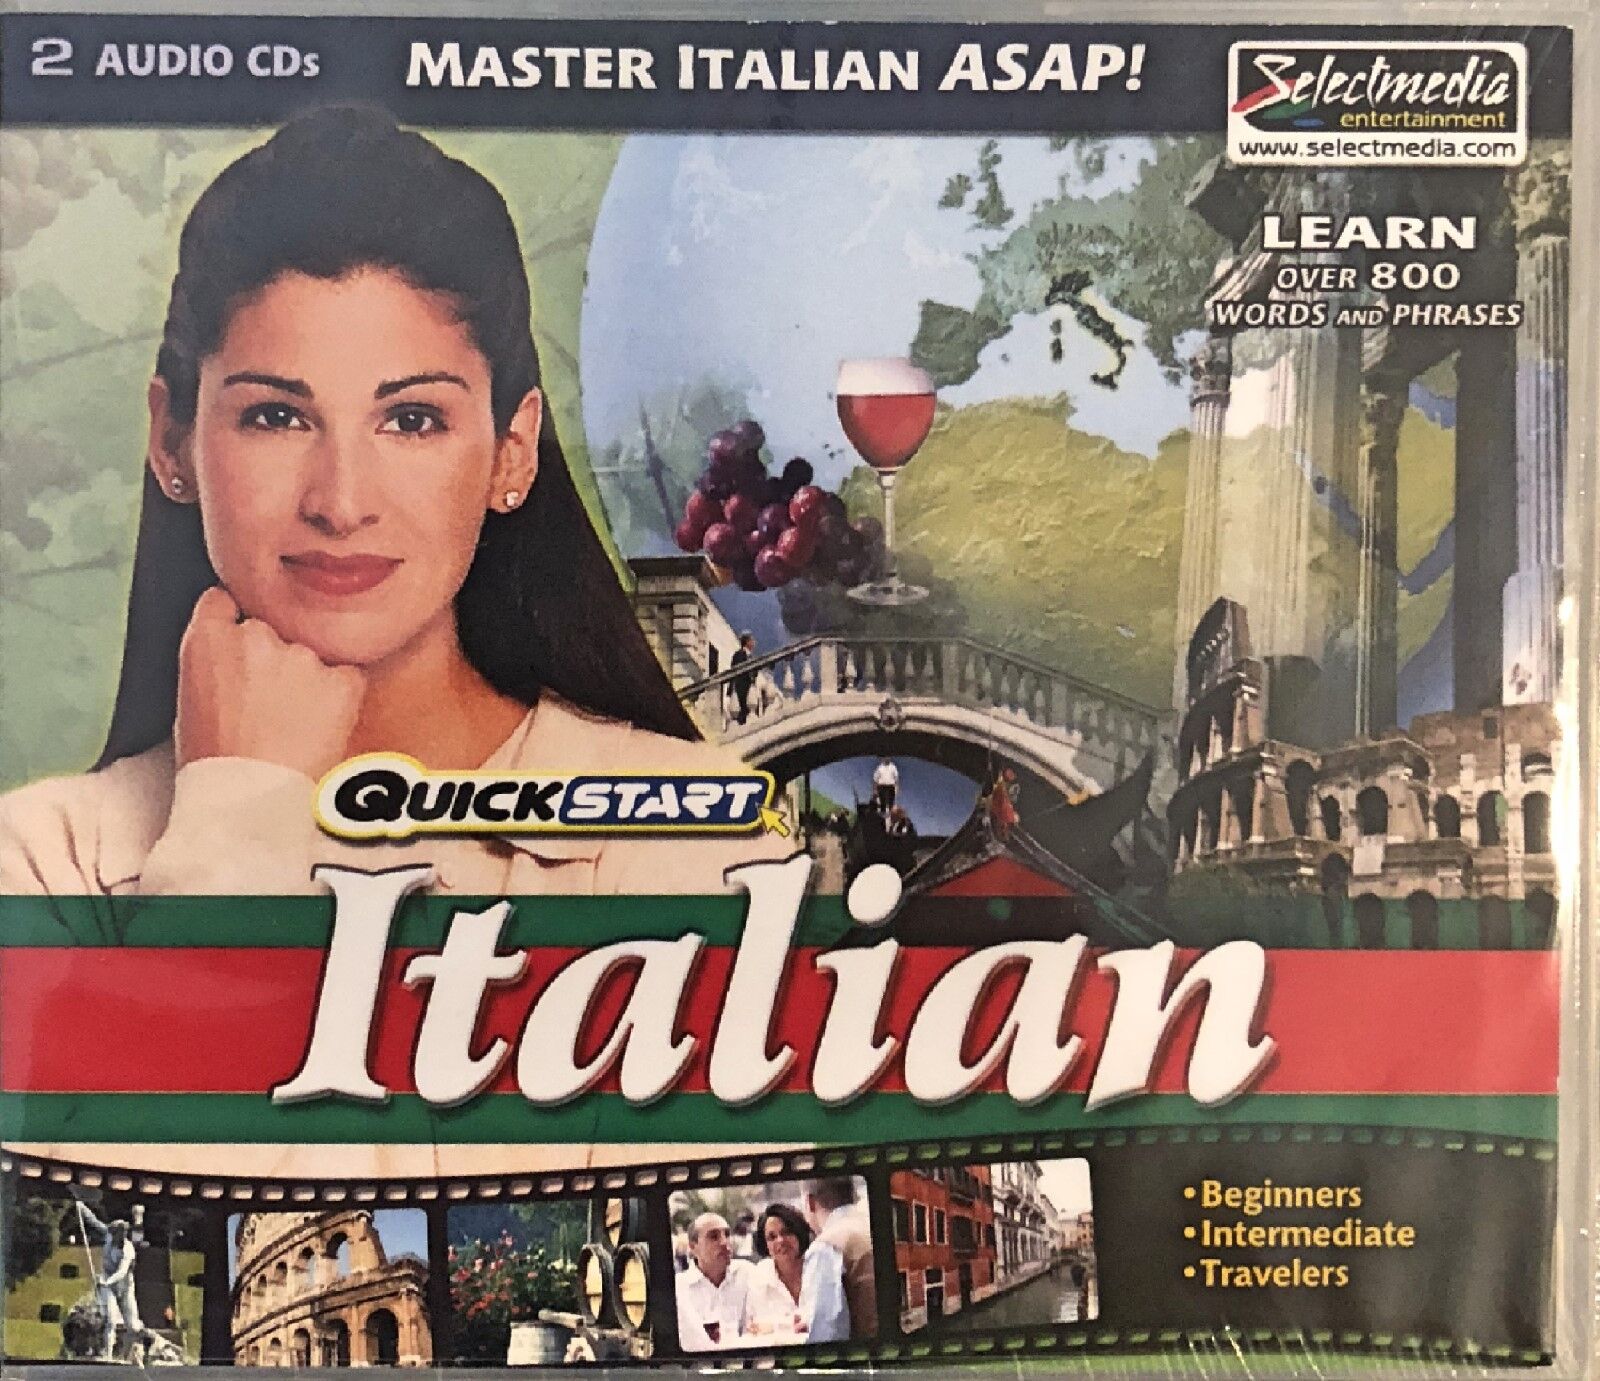 QuickStart Italian Audio Pc or Cd Rom Player New 2 Audio CDs 800 Words & Phrases